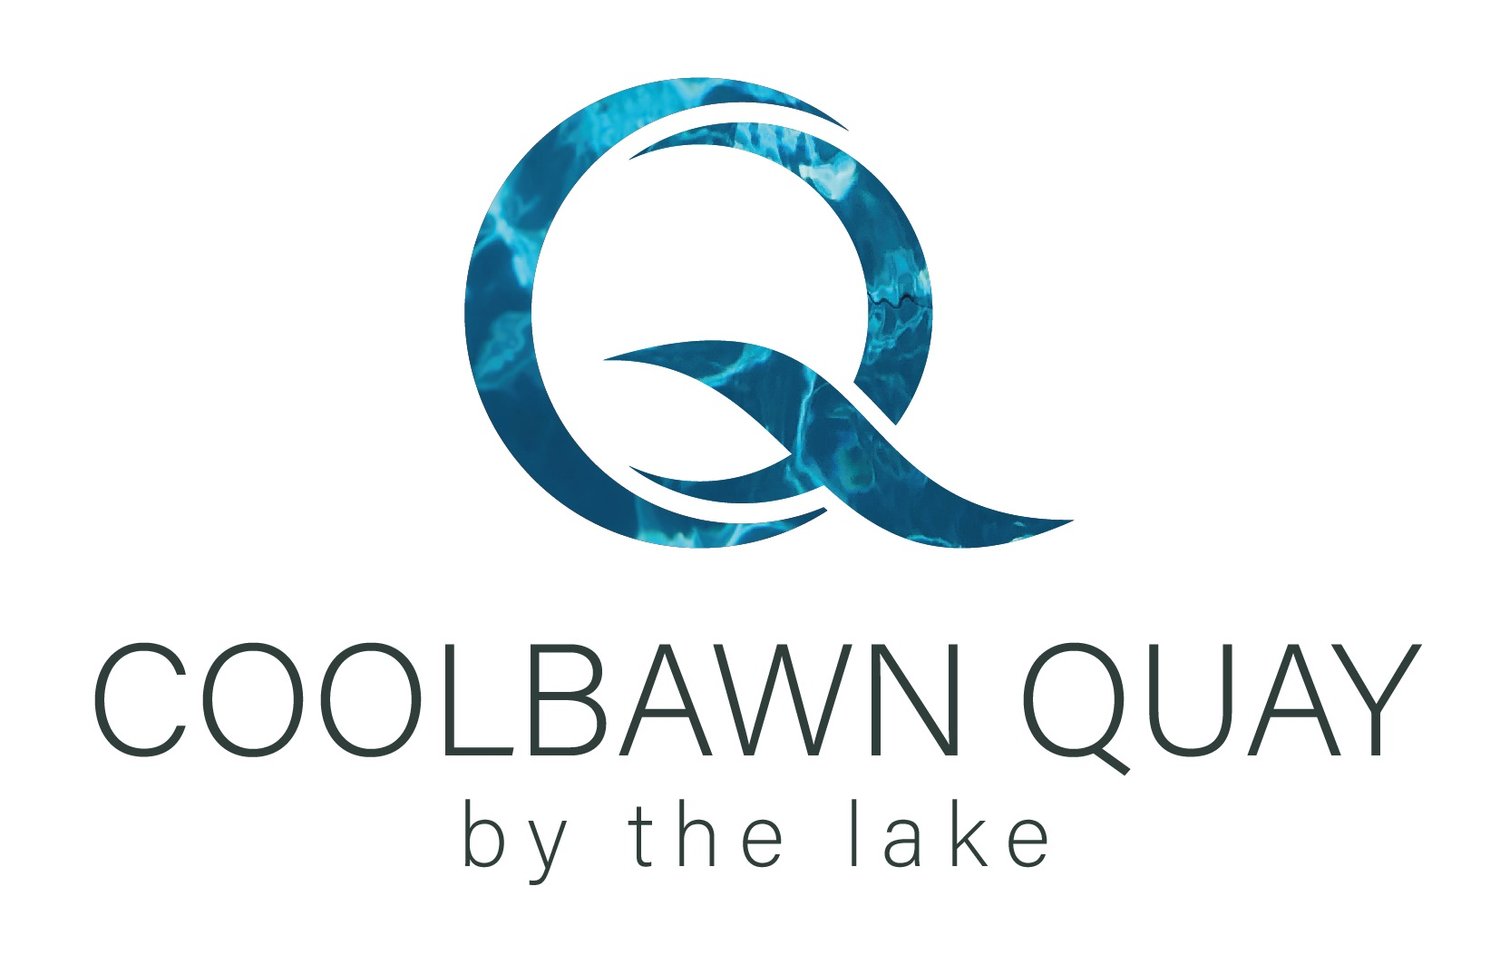 Coolbawn Quay